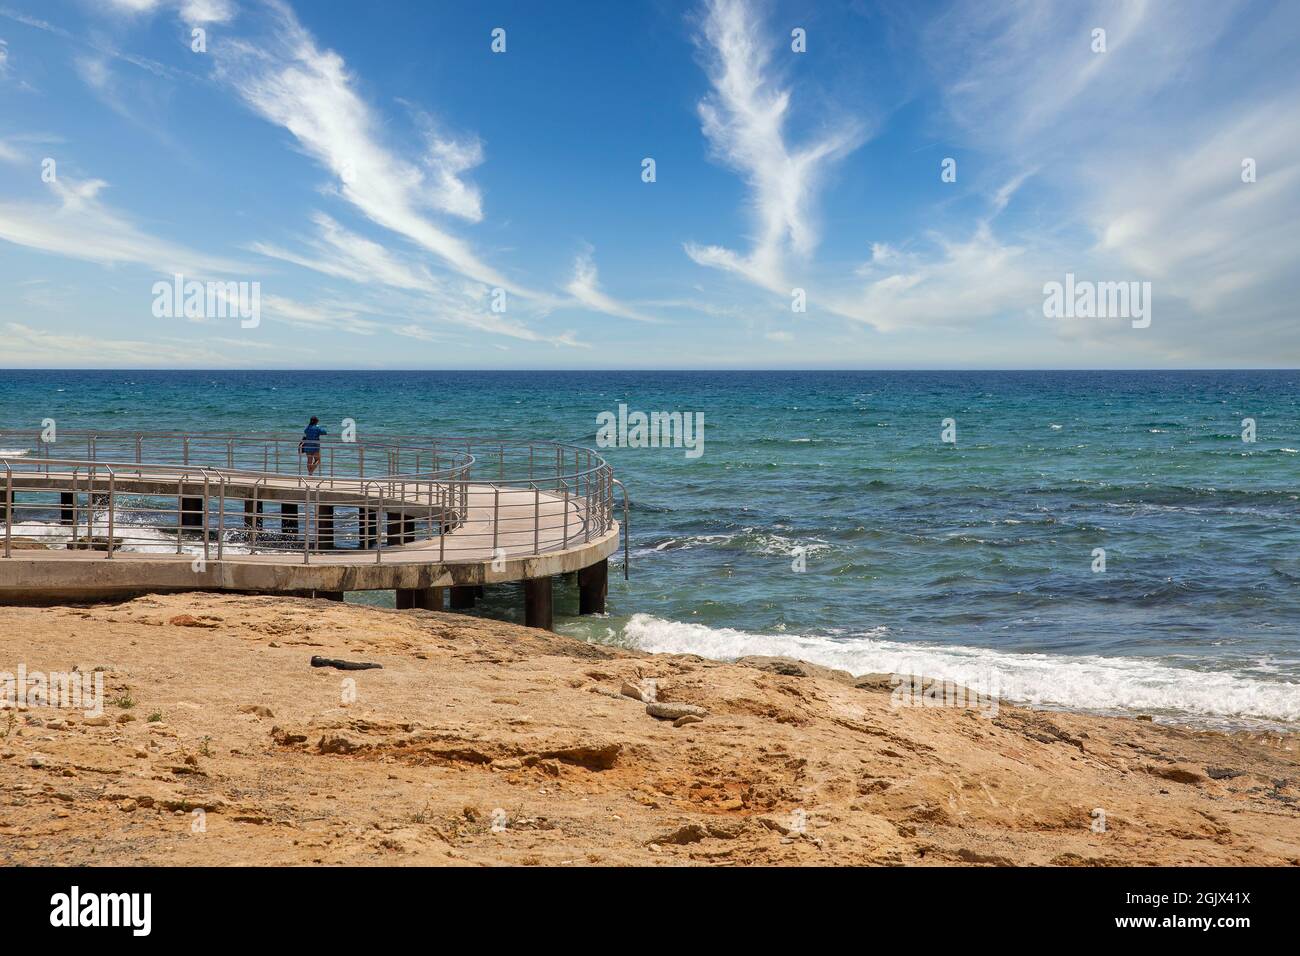 Alone woman on Ayia Napa beach promenade seafront, Cyprus. Stock Photo